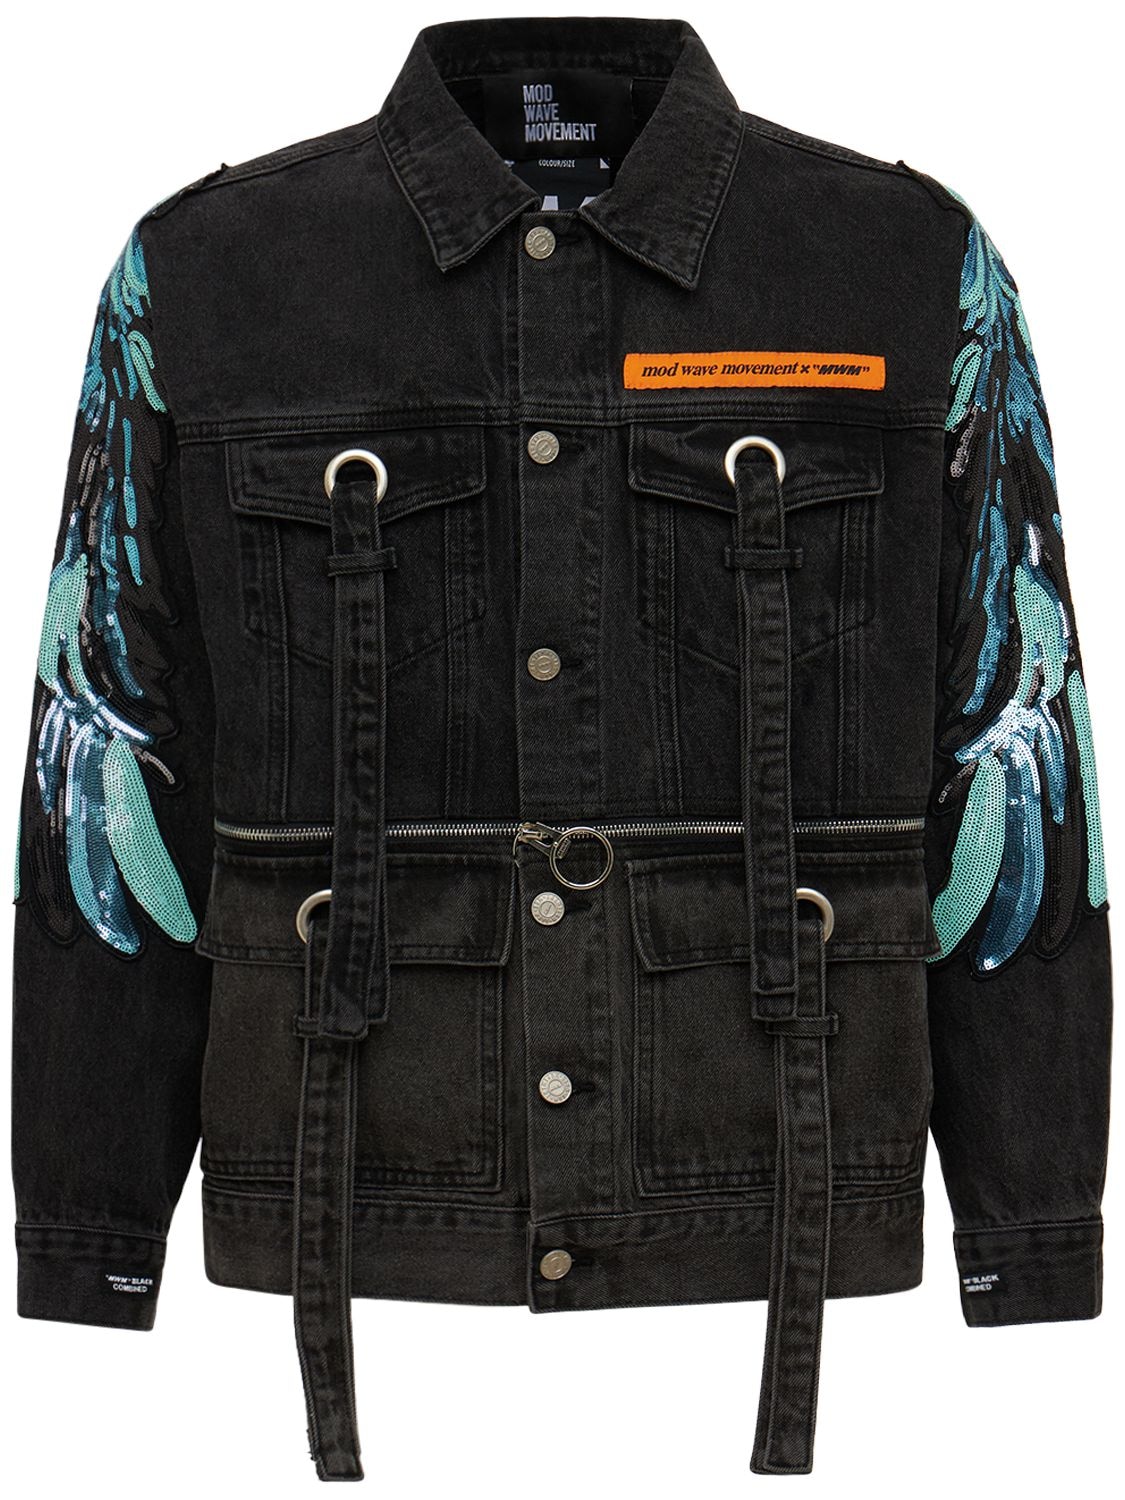 Mwm - Mod Wave Movement Cotton Denim Jacket W/ Pockets In Black | ModeSens